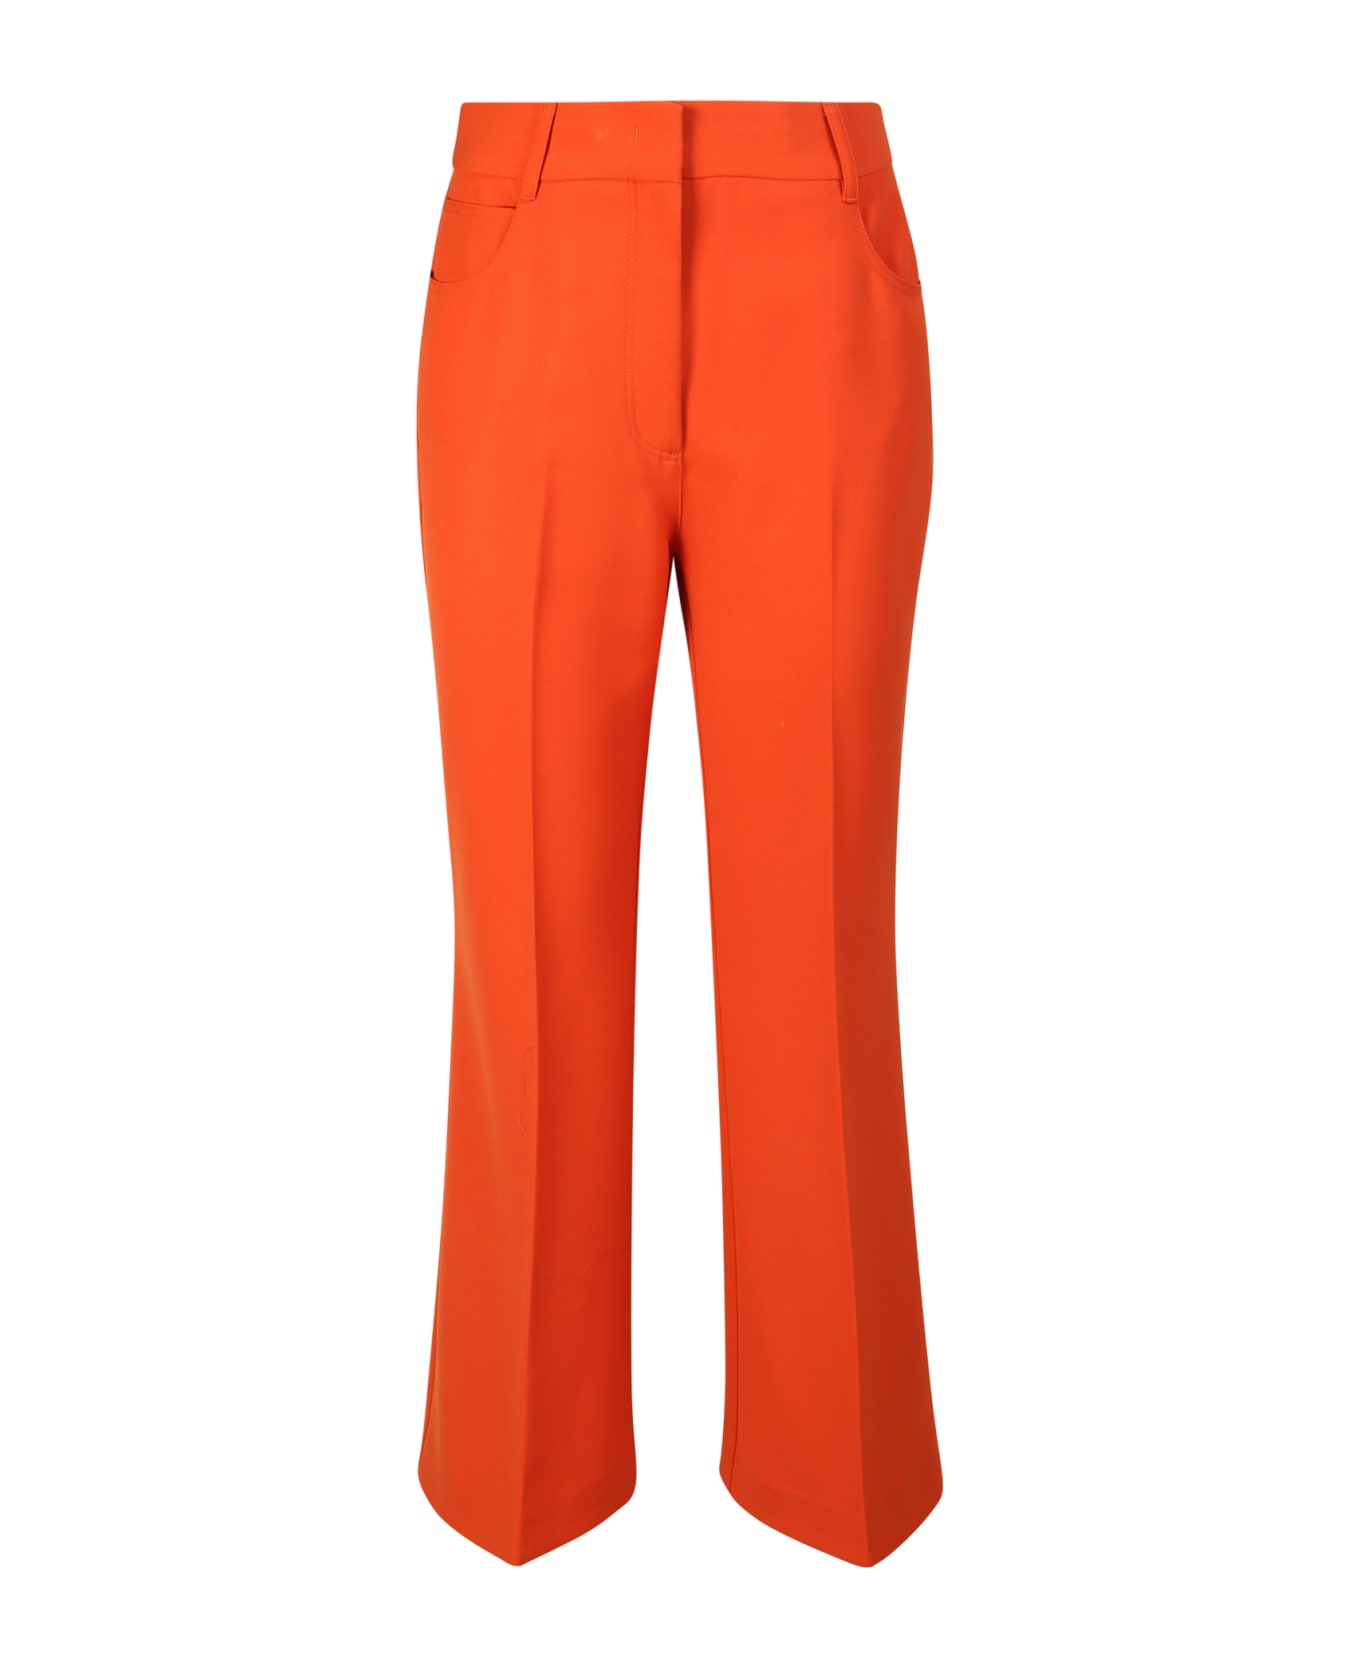 Stella McCartney Cropped Tailored Trousers - Orange ボトムス